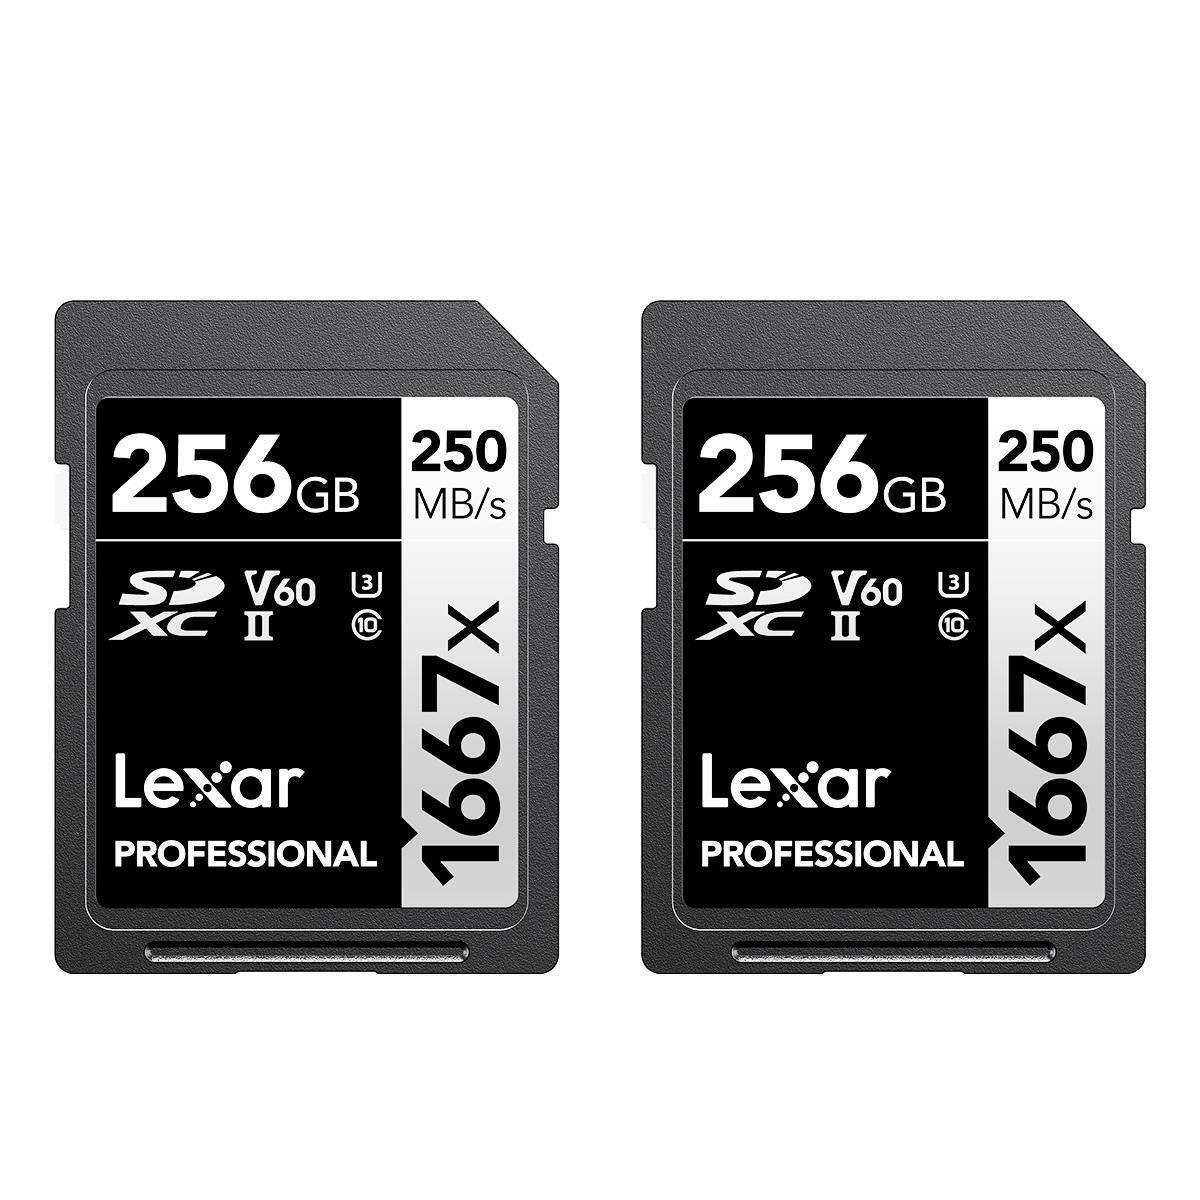 Lexar SILVER Series Professional 1667x 256GB UHS-II SDXC Memory Card, 2-Pack - $205.99